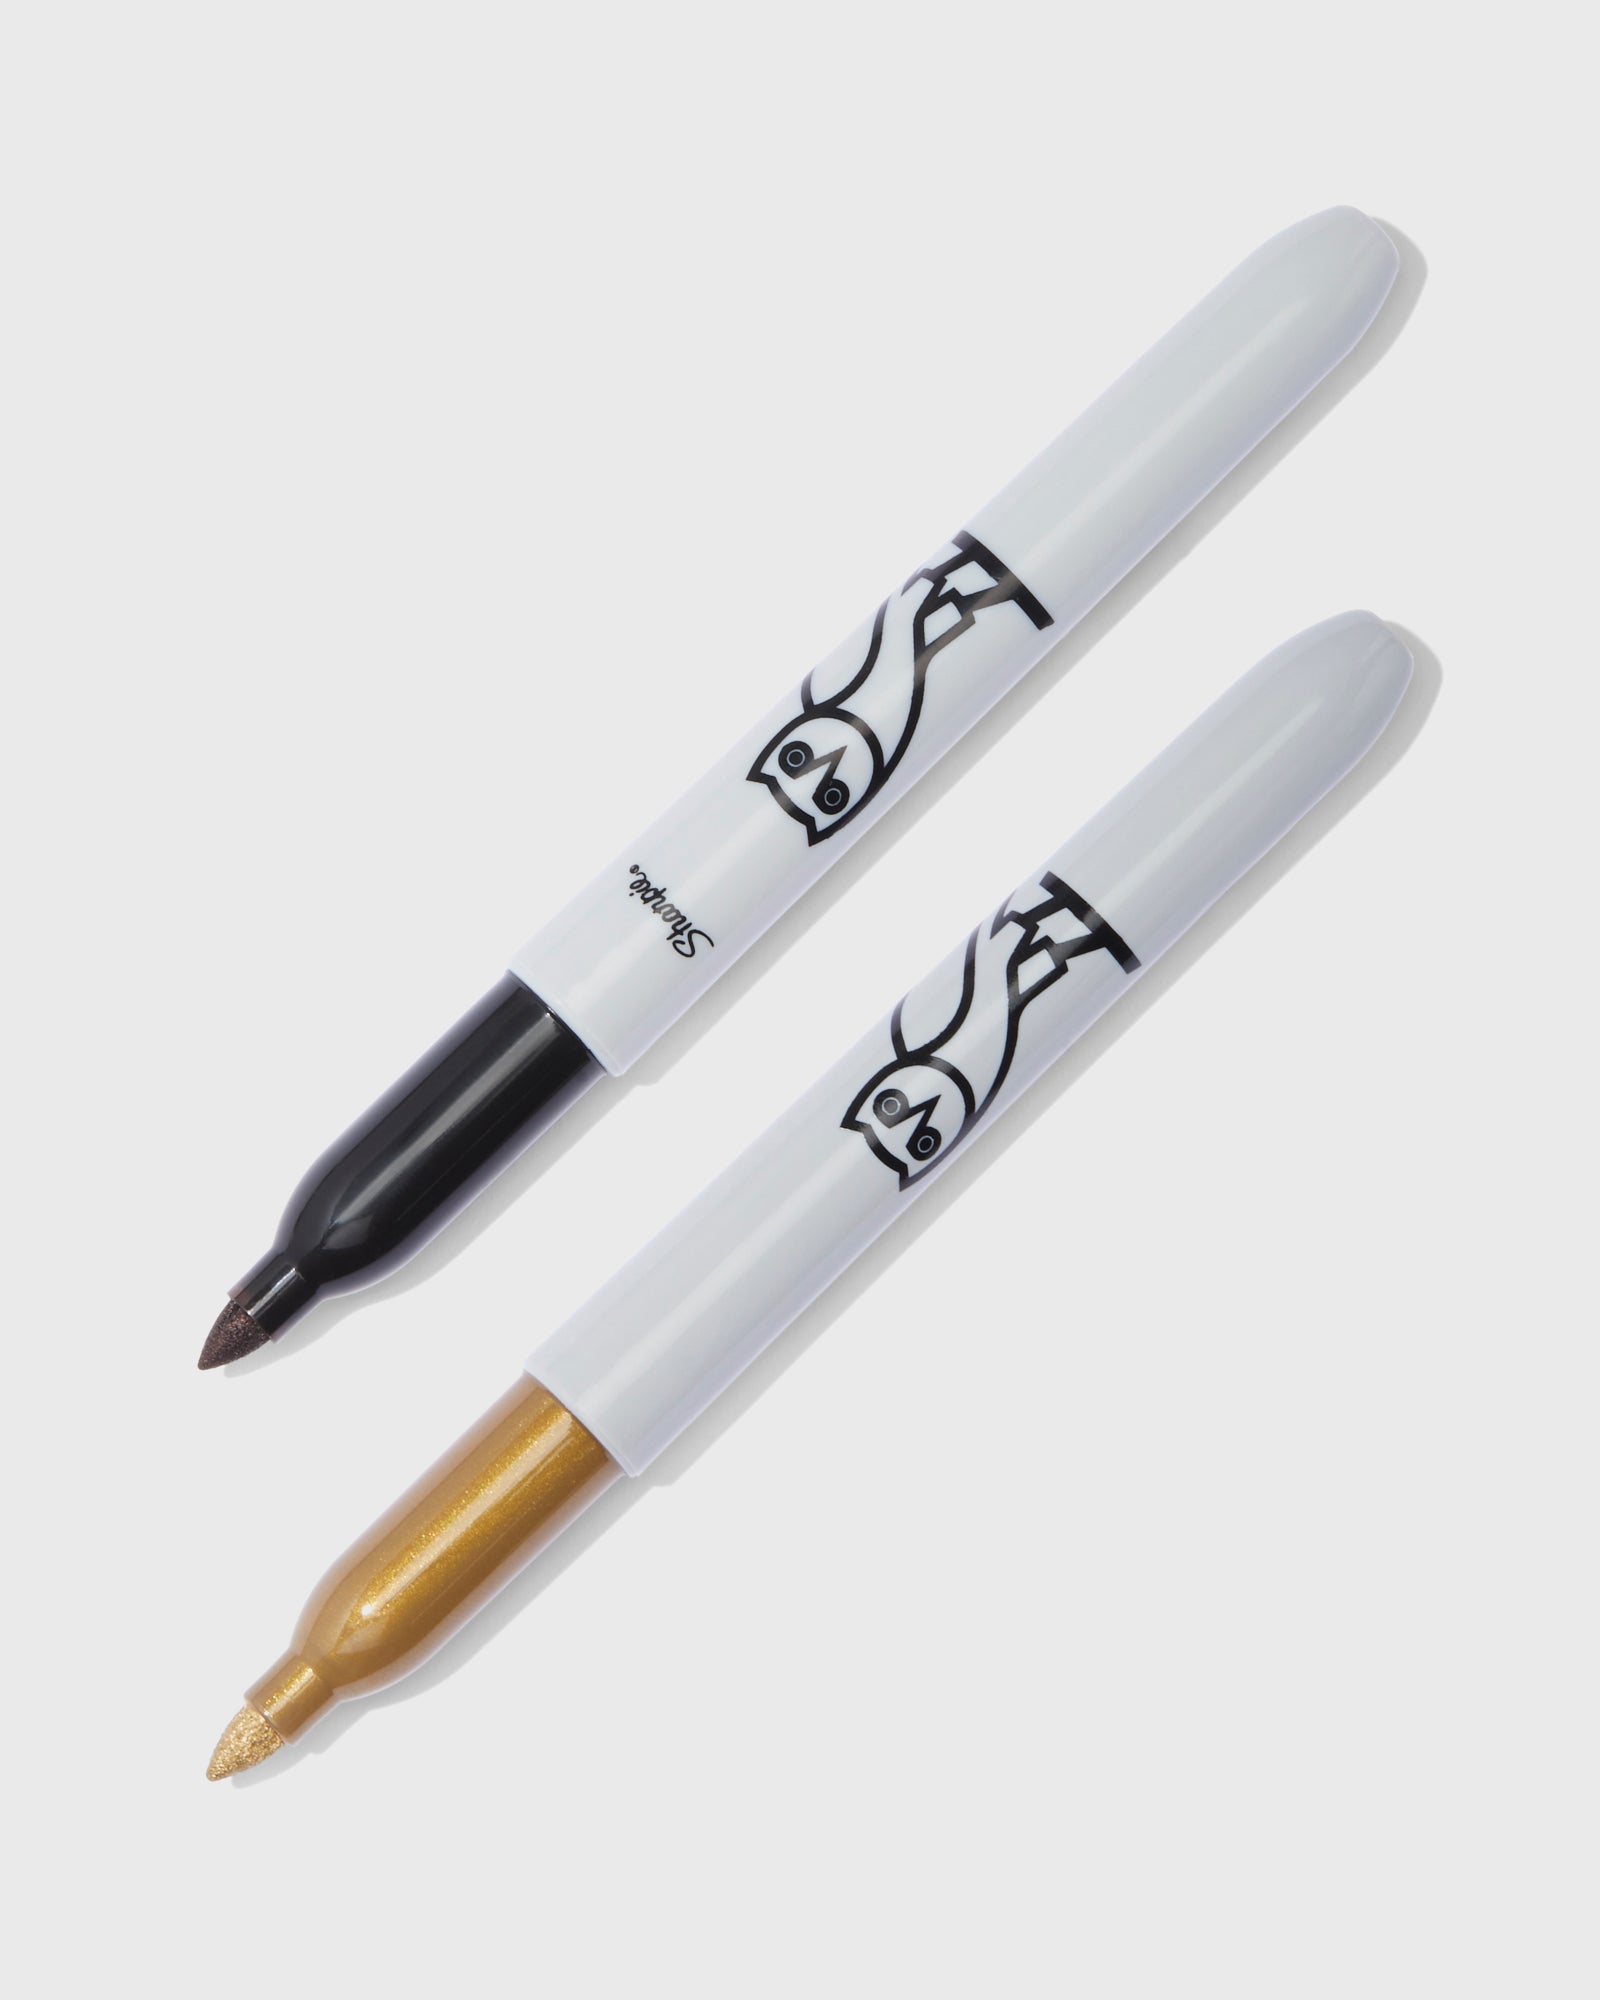 Maxfli Sharpie Pens – 2 Pack